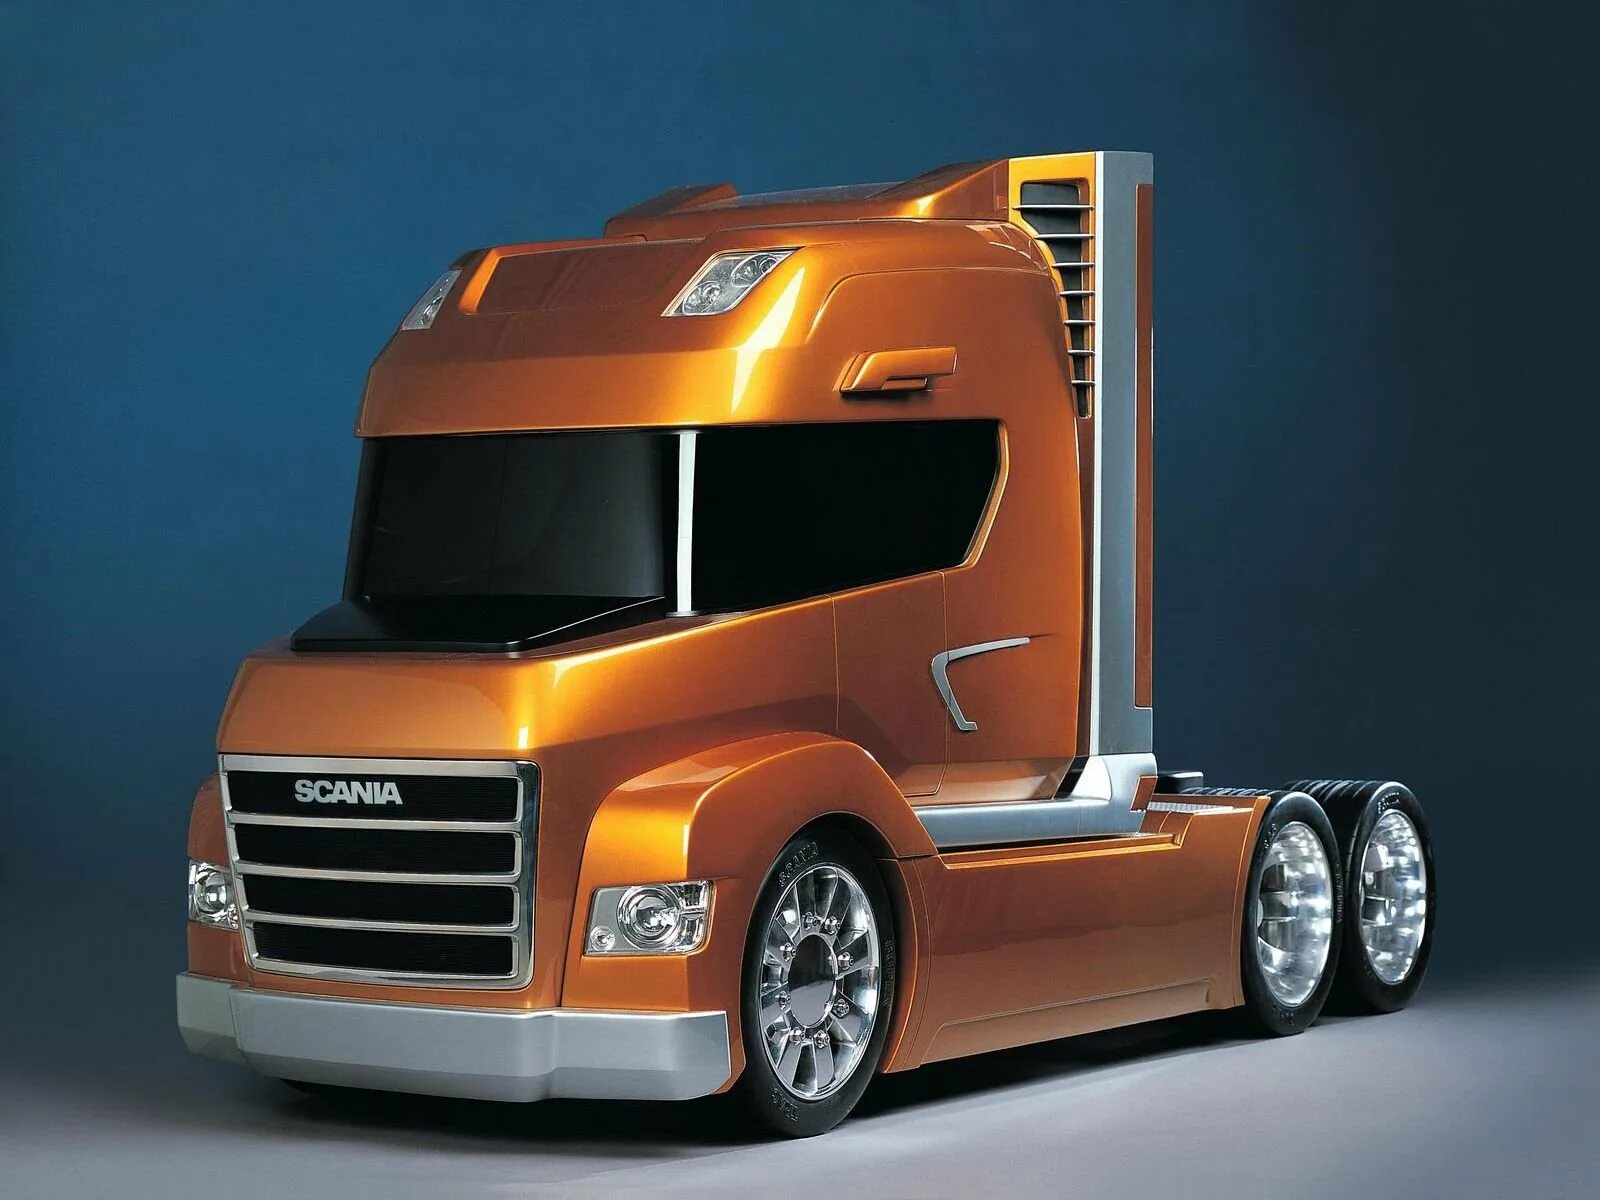 Легковушка скания. Scania Stax Concept 2002. Скания тягачи 2020 концепт. Американский грузовик Скания. Грузовик Скания Вабис.